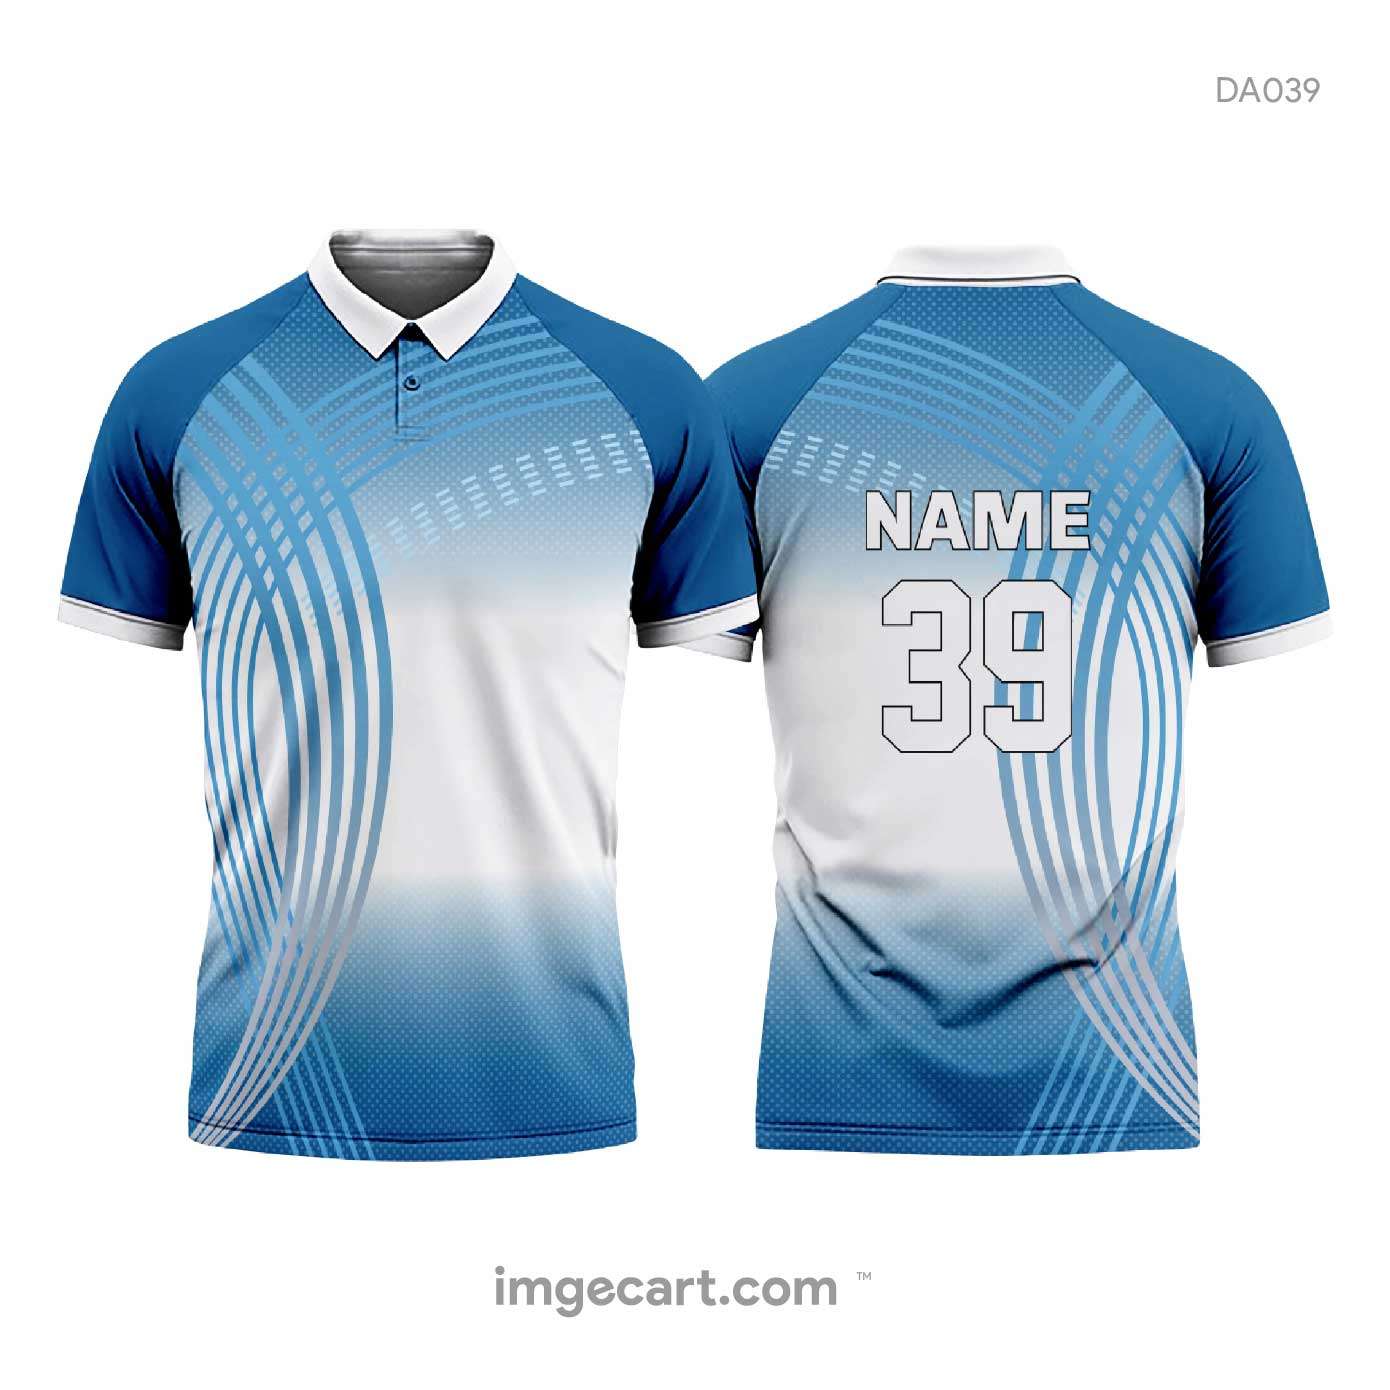 Best cricket jersey designs full sleeve - Cricket team Jerseys | Just Adore  – Just Adore®